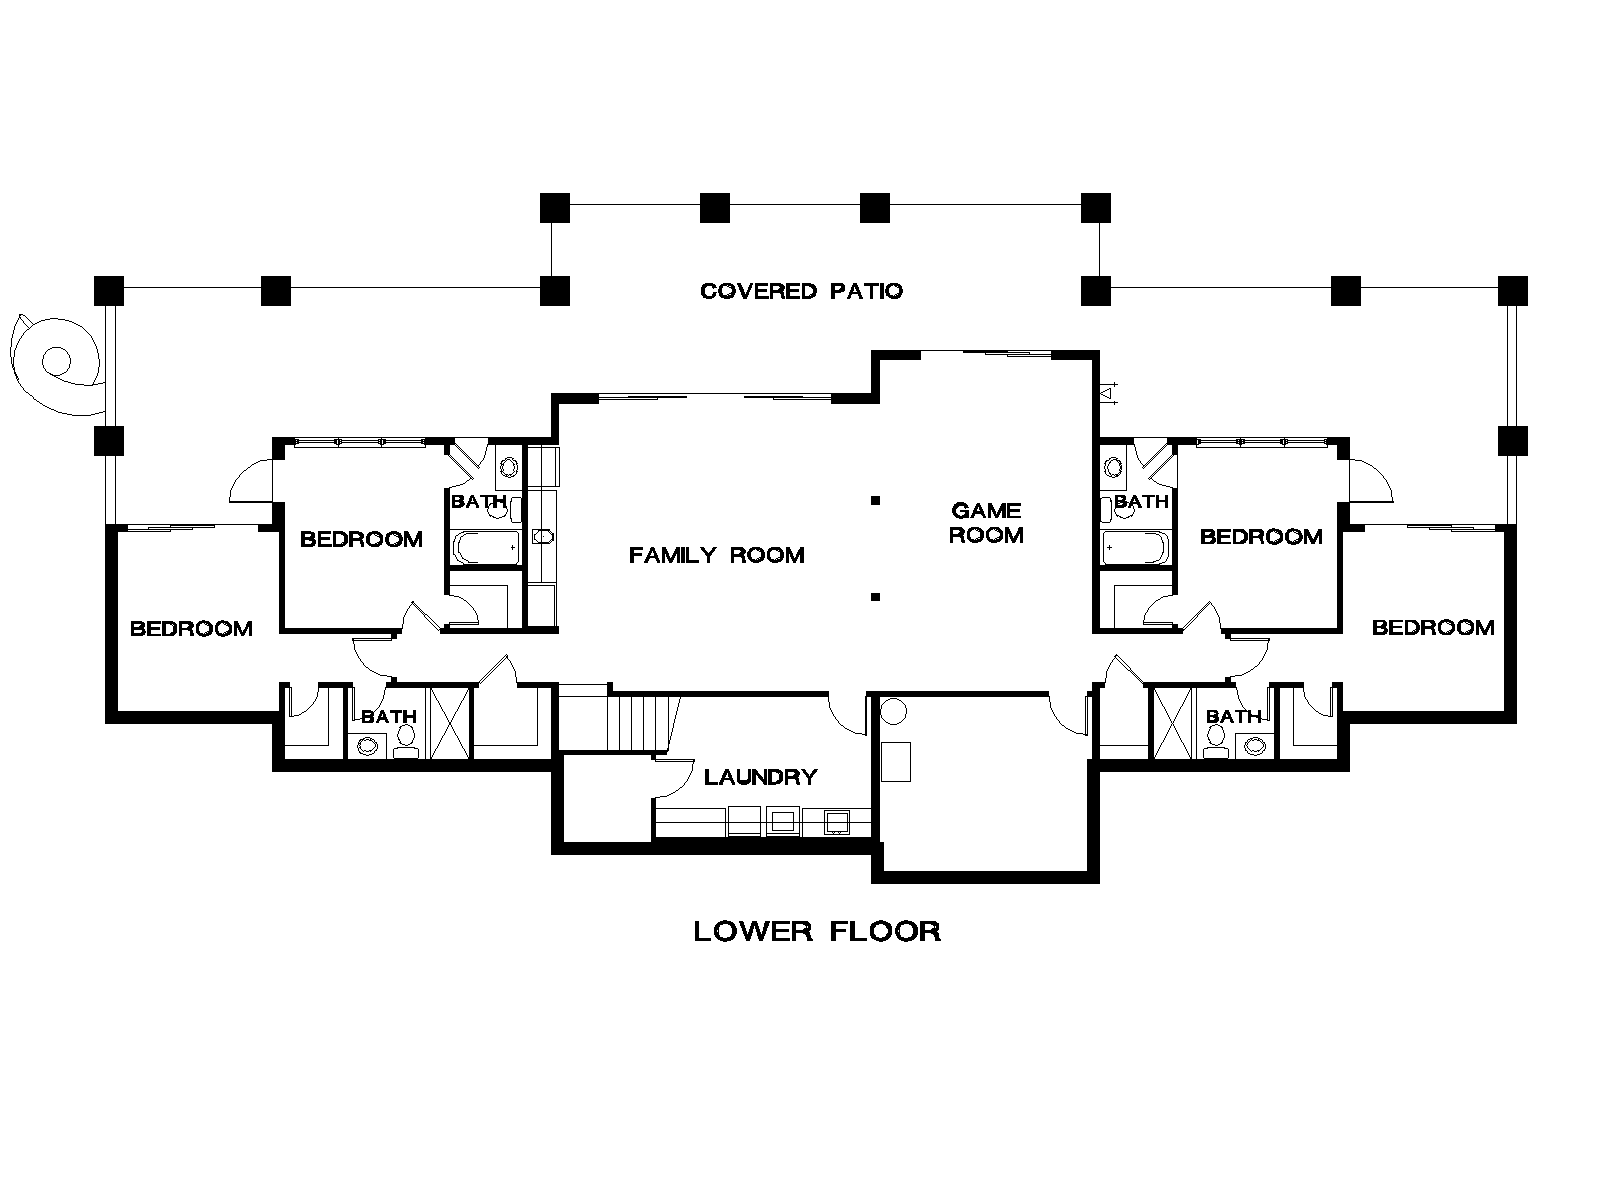 Lower Floor Plan.png